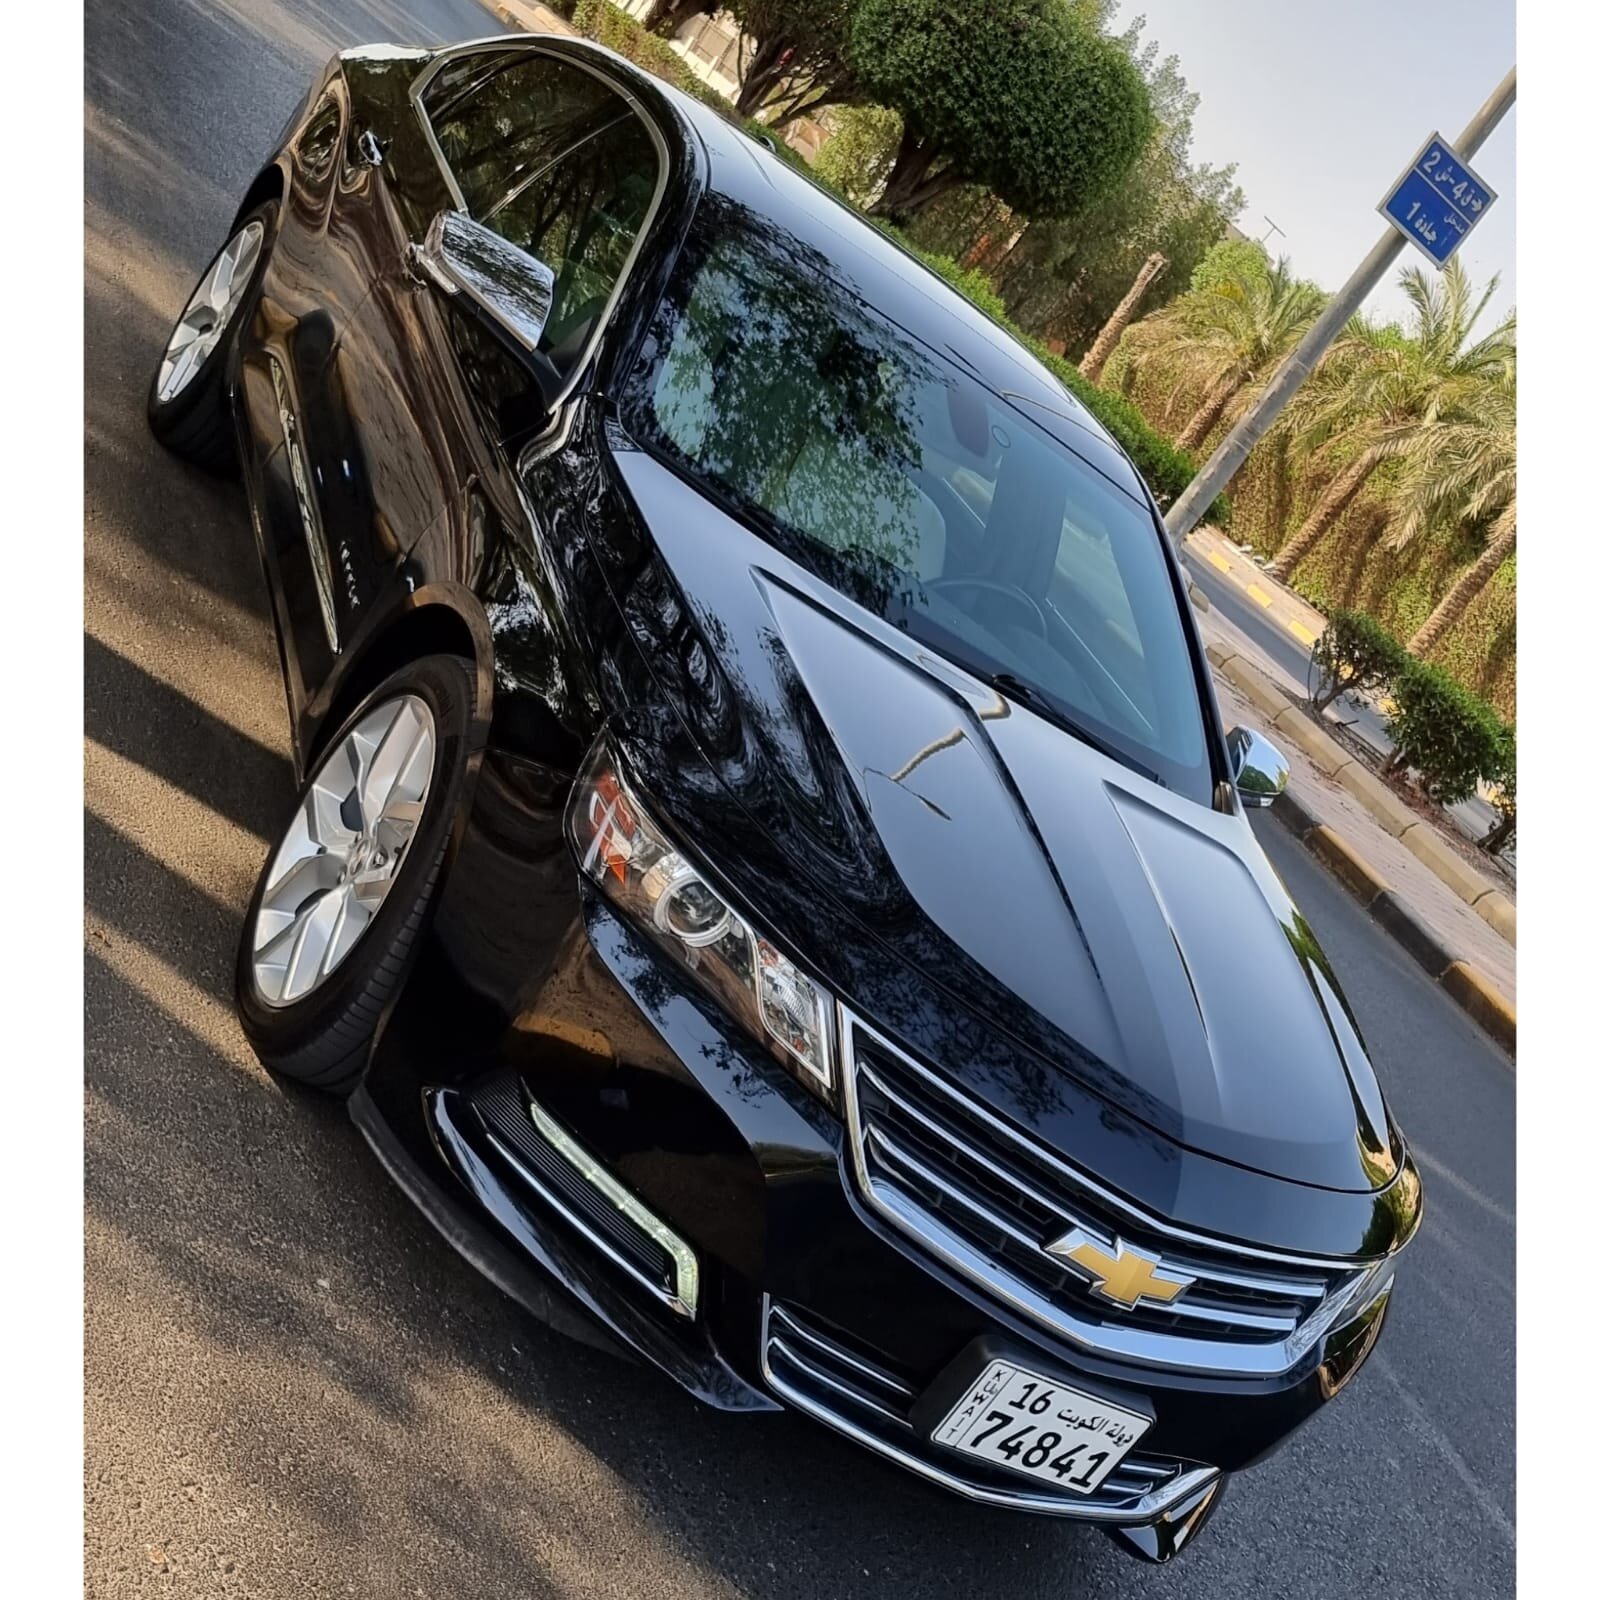 Chevrolet impala 2019 شفروليه امبالا ٢٠١٩3.jpeg